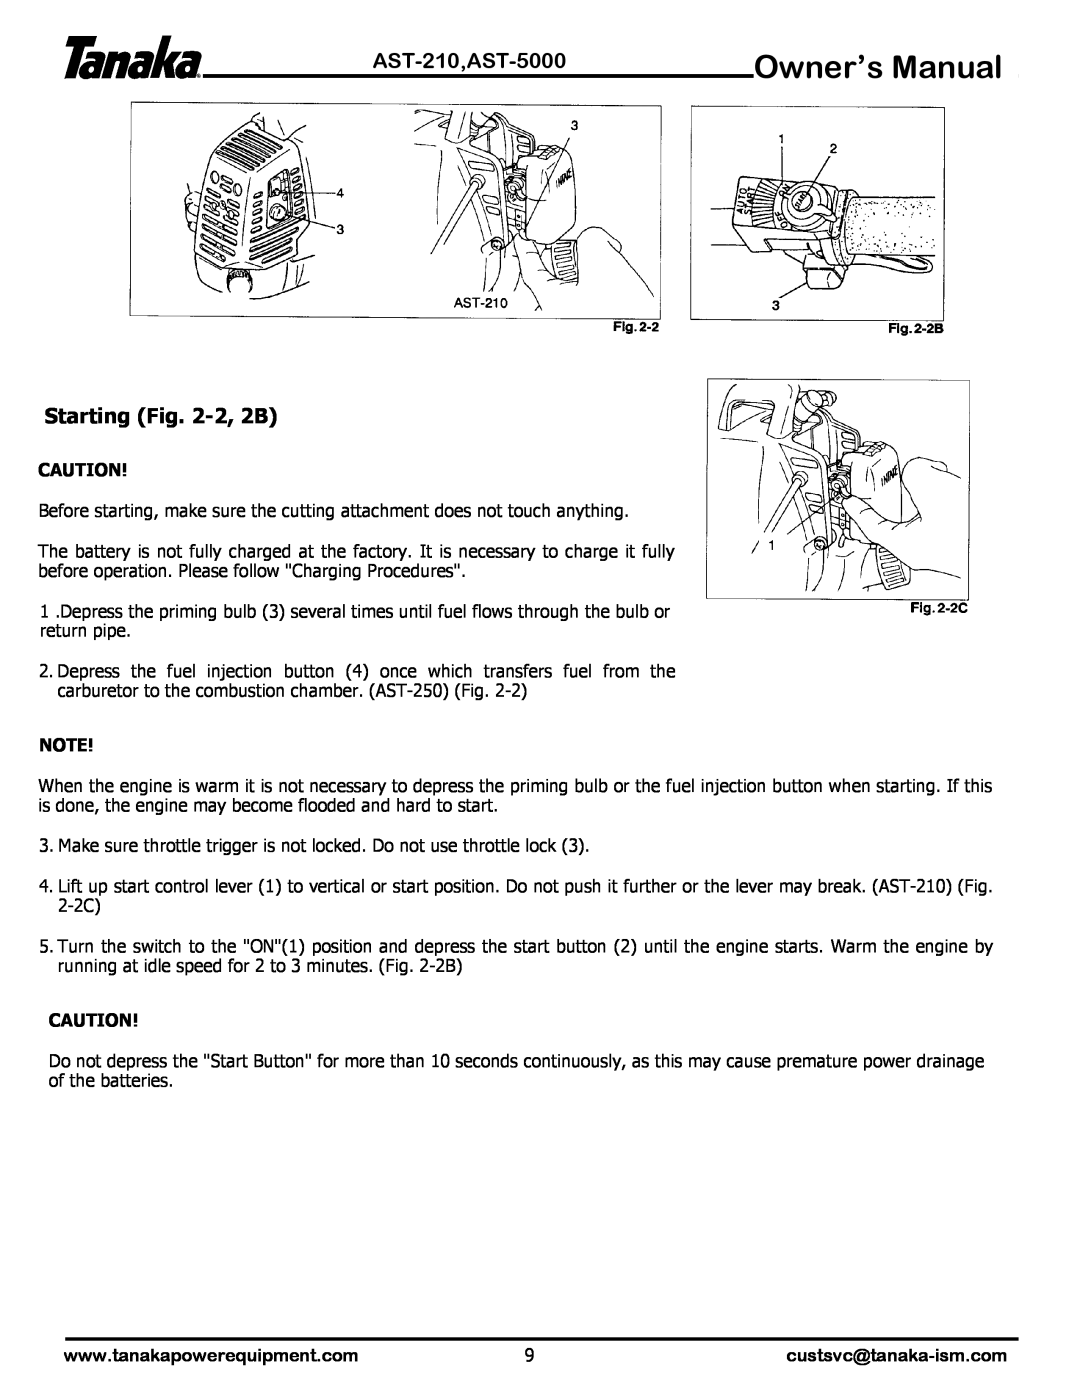 Tanaka manual Starting -2, 2B, Owner’s Manual, AST-210,AST-5000, custsvc@tanaka-ism.com 